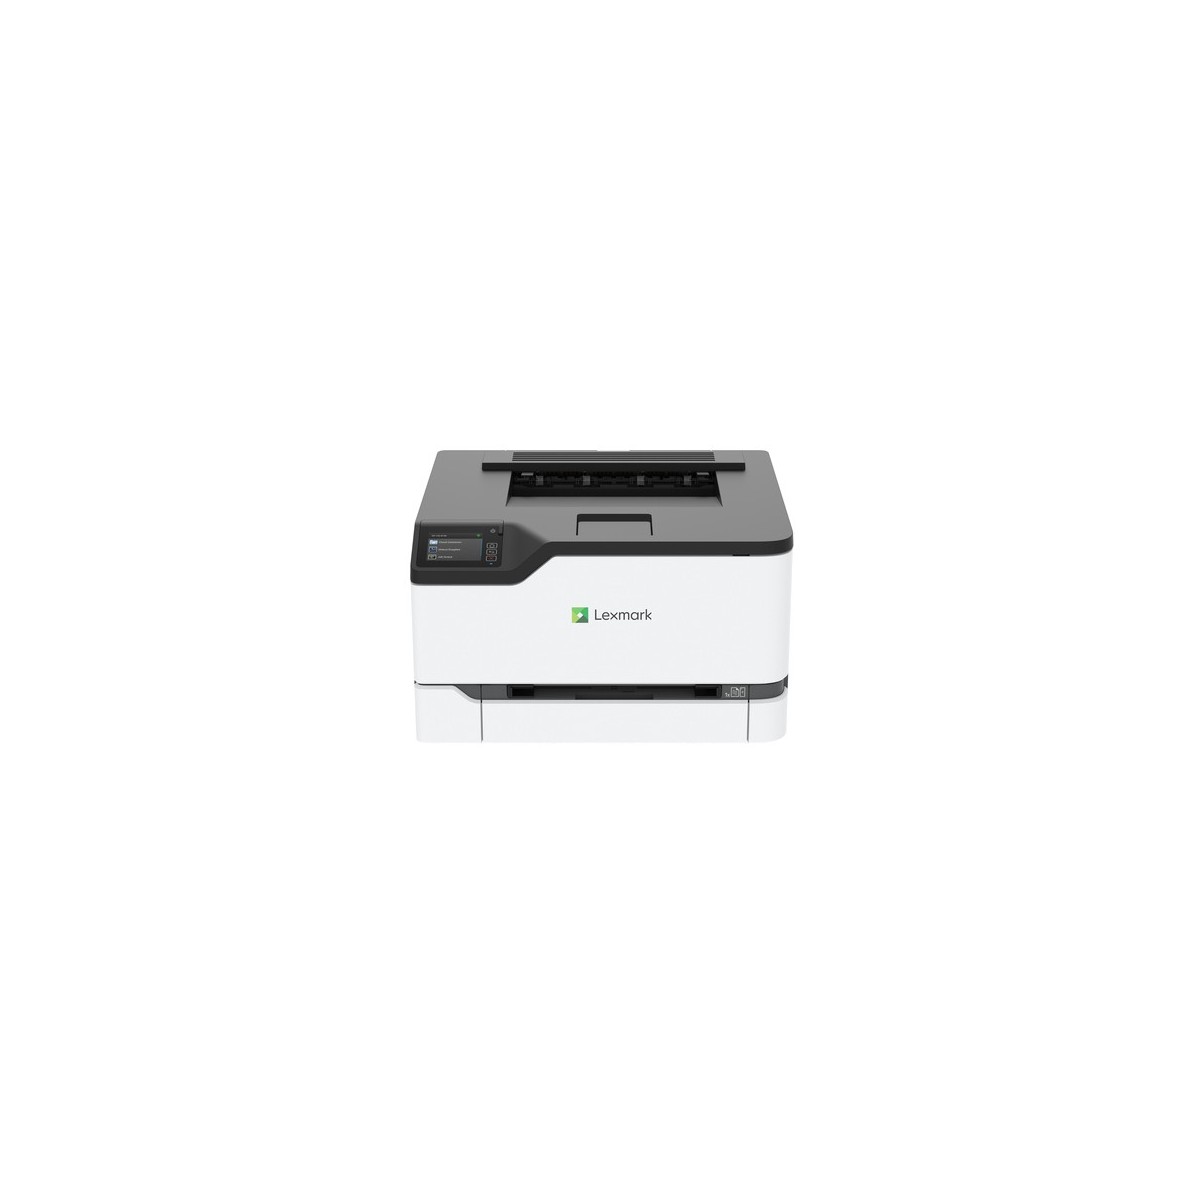 Lexmark CS431dw - Laser - Colour - 600 x 600 DPI - A4 - 24.7 ppm - Duplex printing